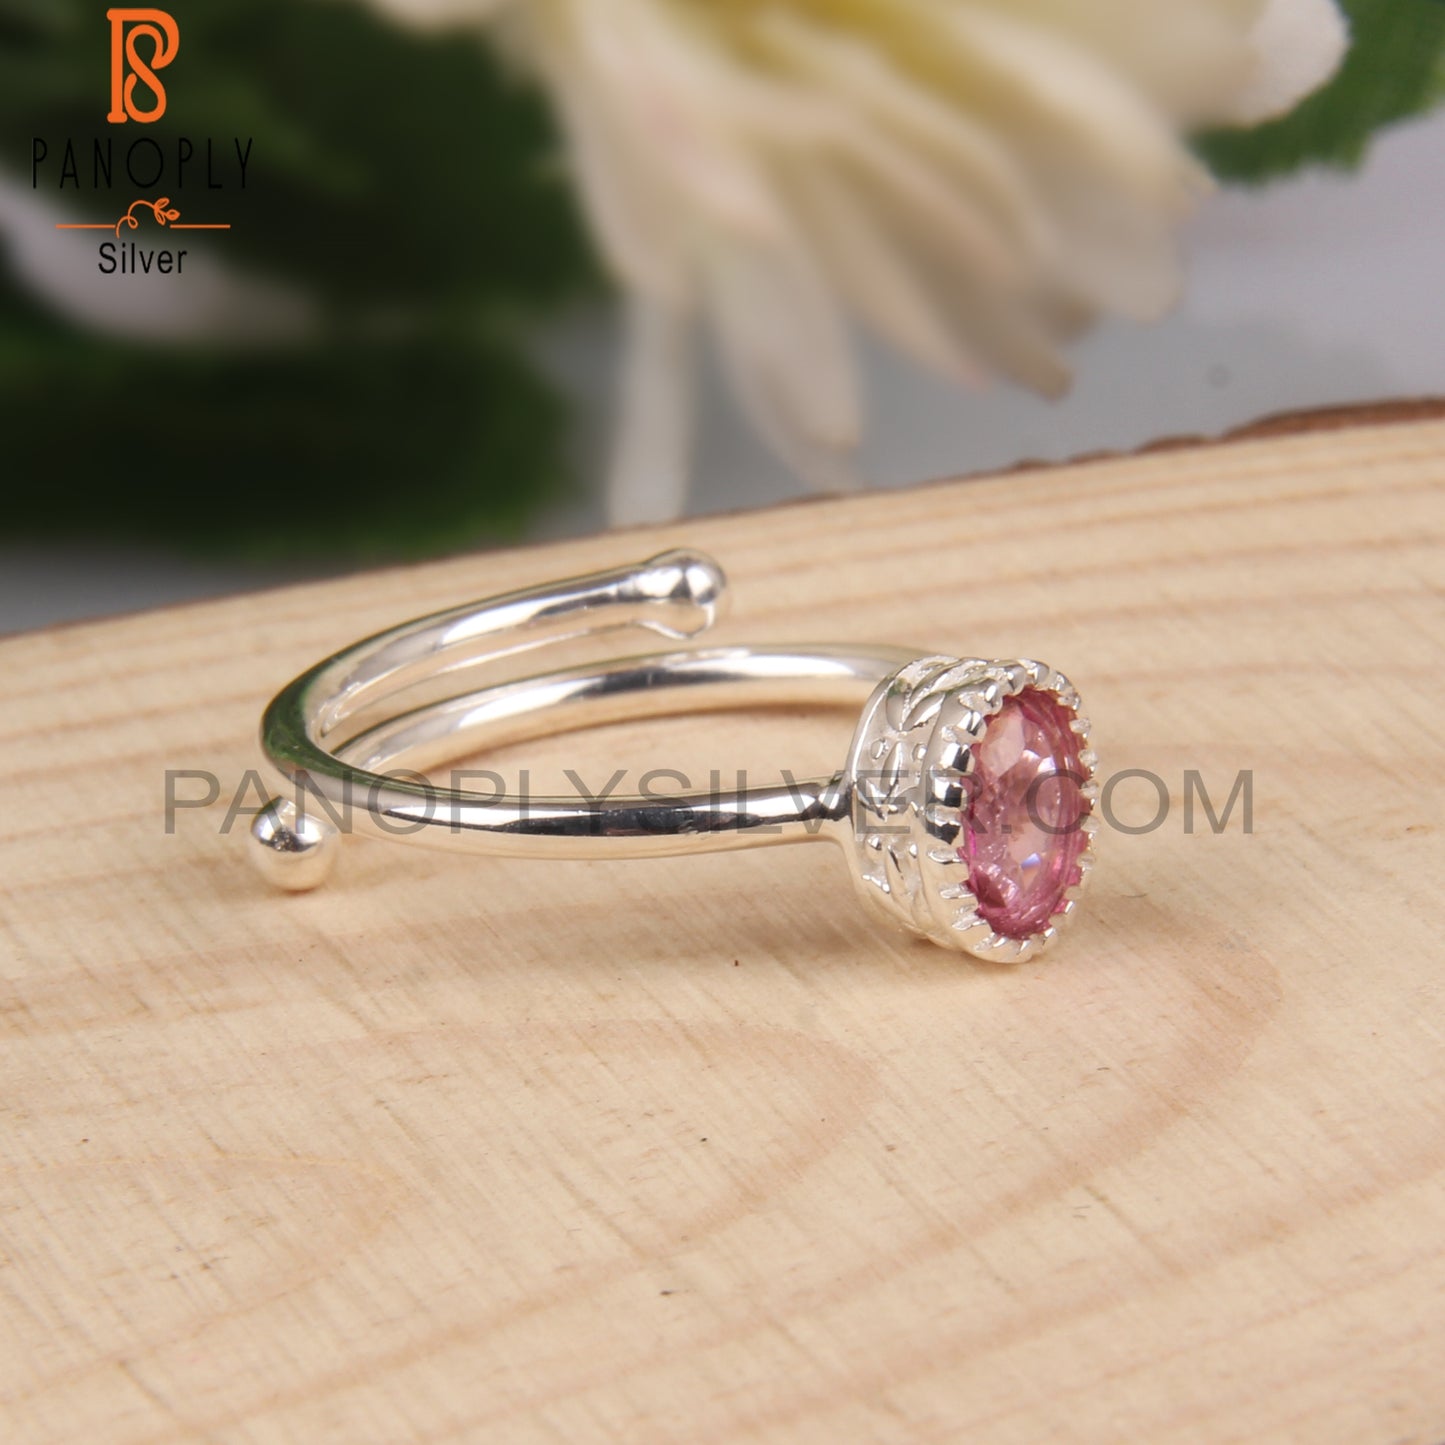 Oval Pink Topaz 925 Sterling Silver Adjustable Engagement Ring